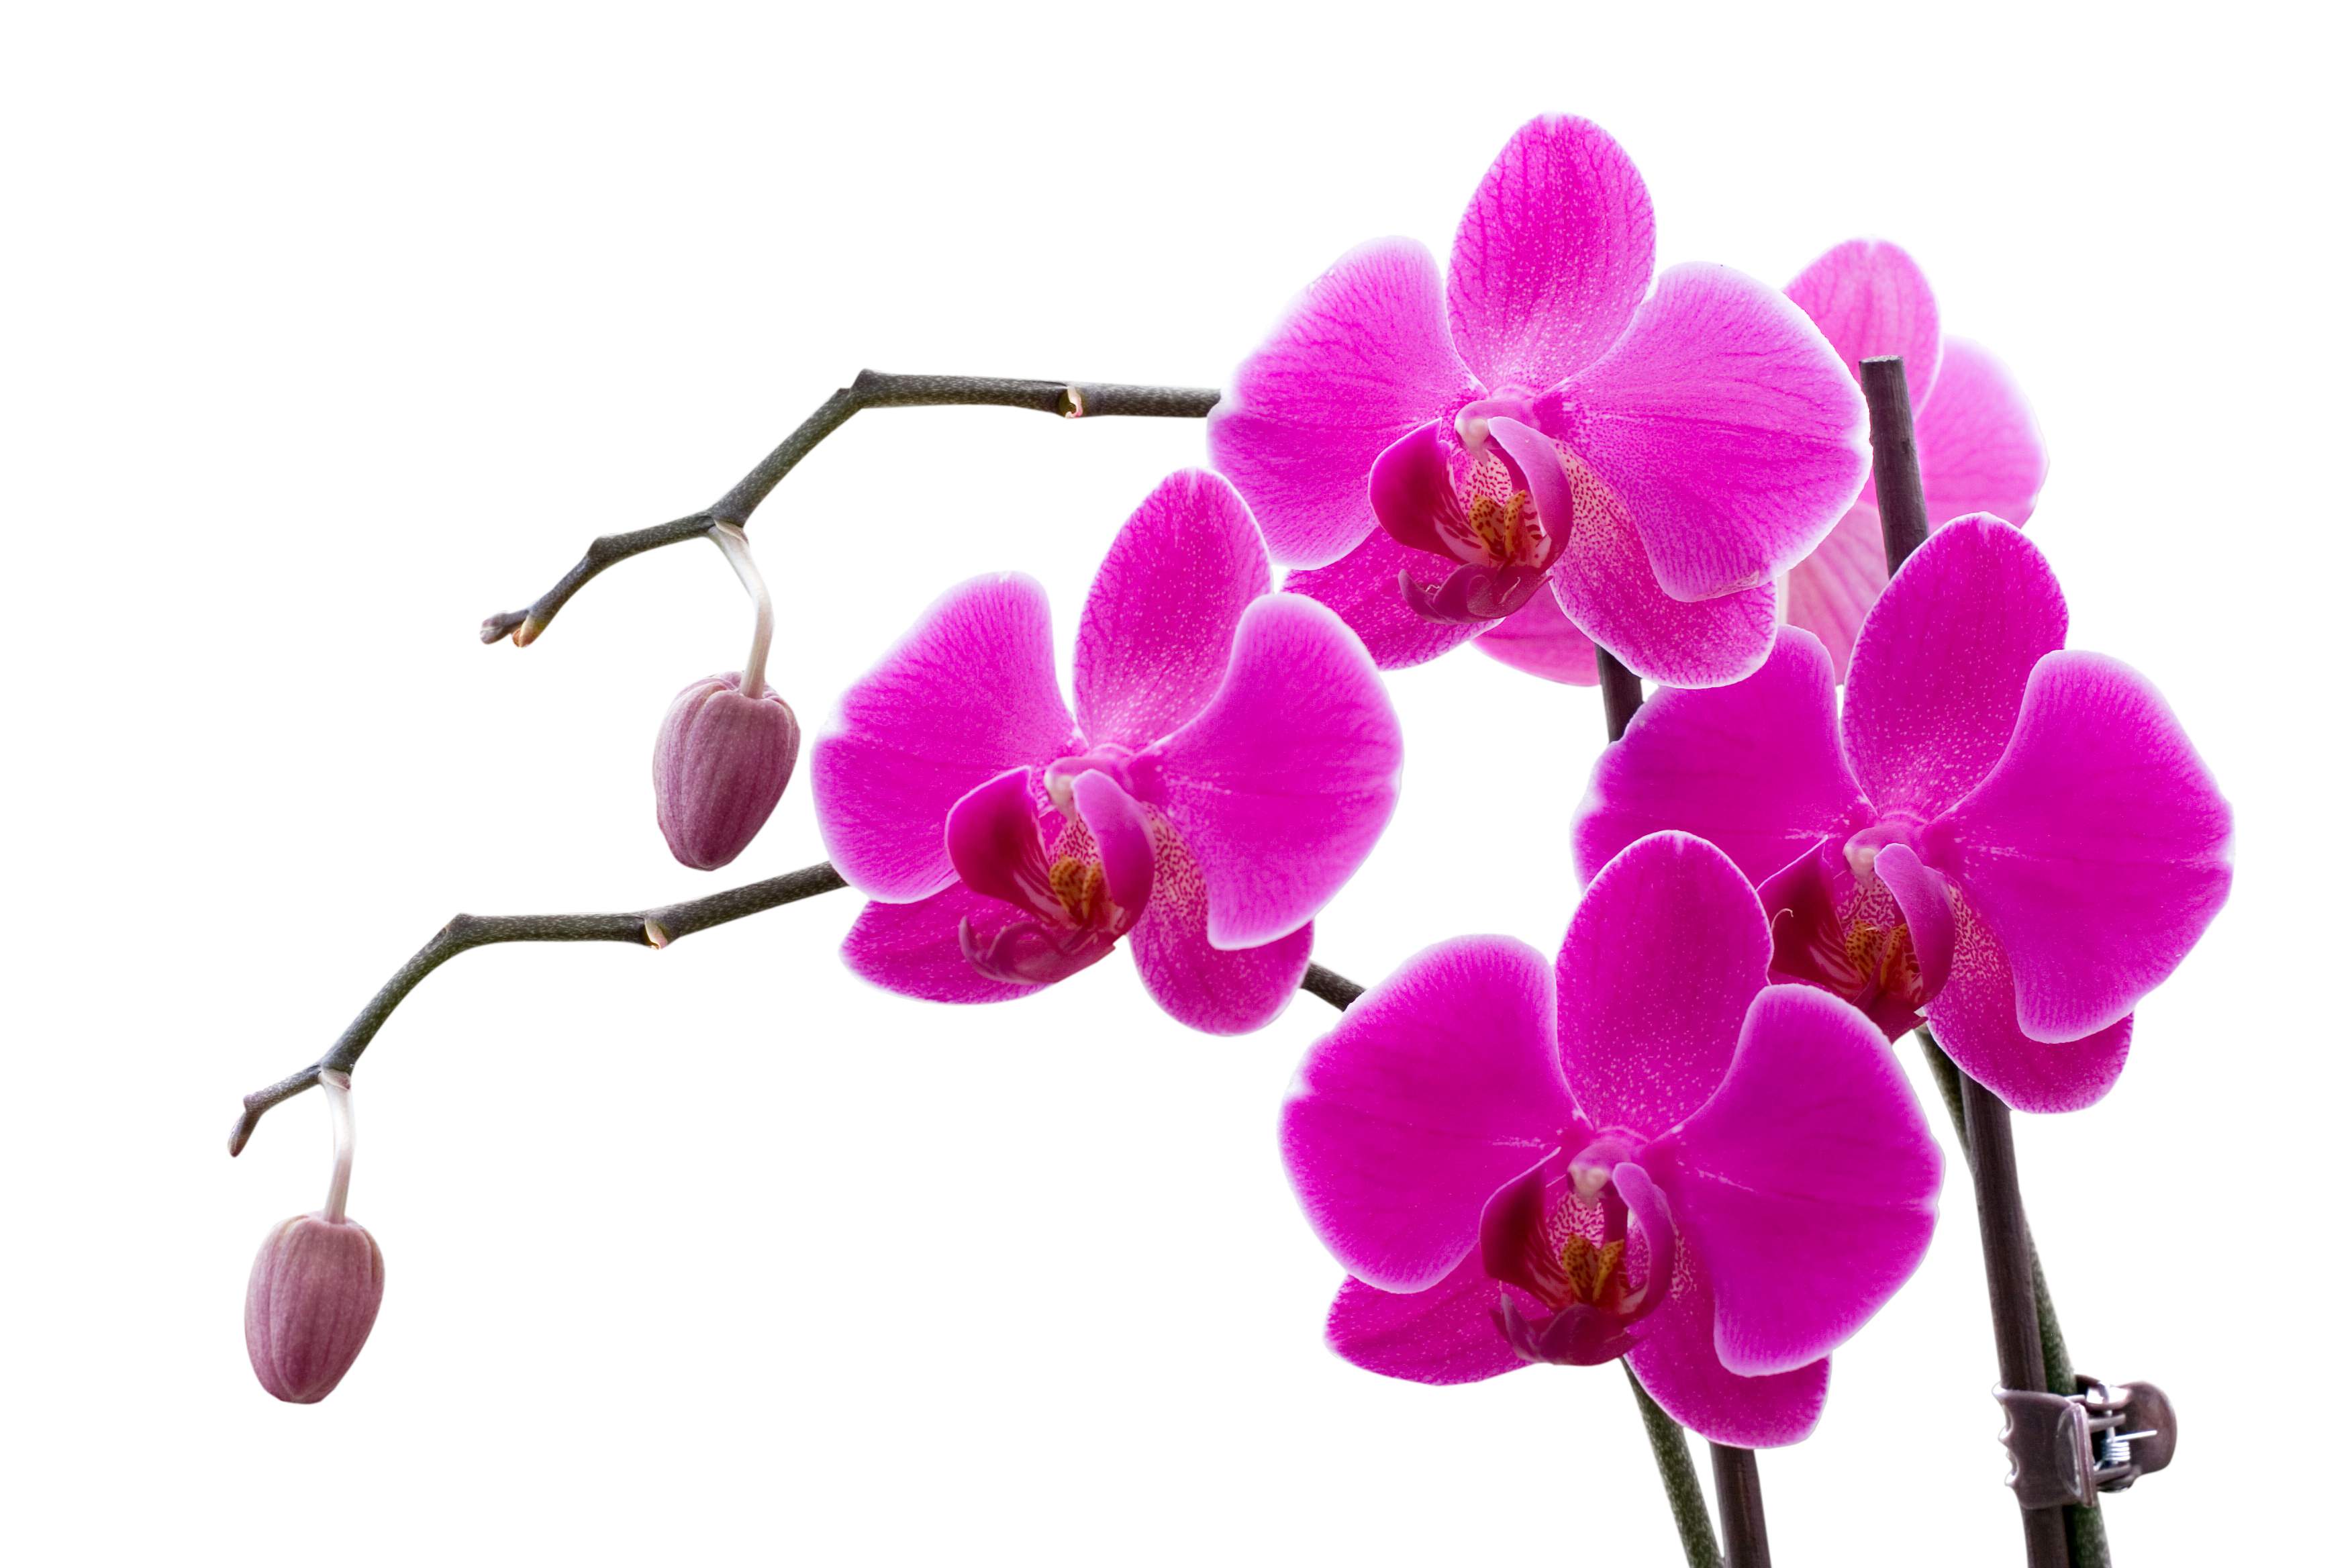 Orchid Flower Wallpaper Wallpaper Inn